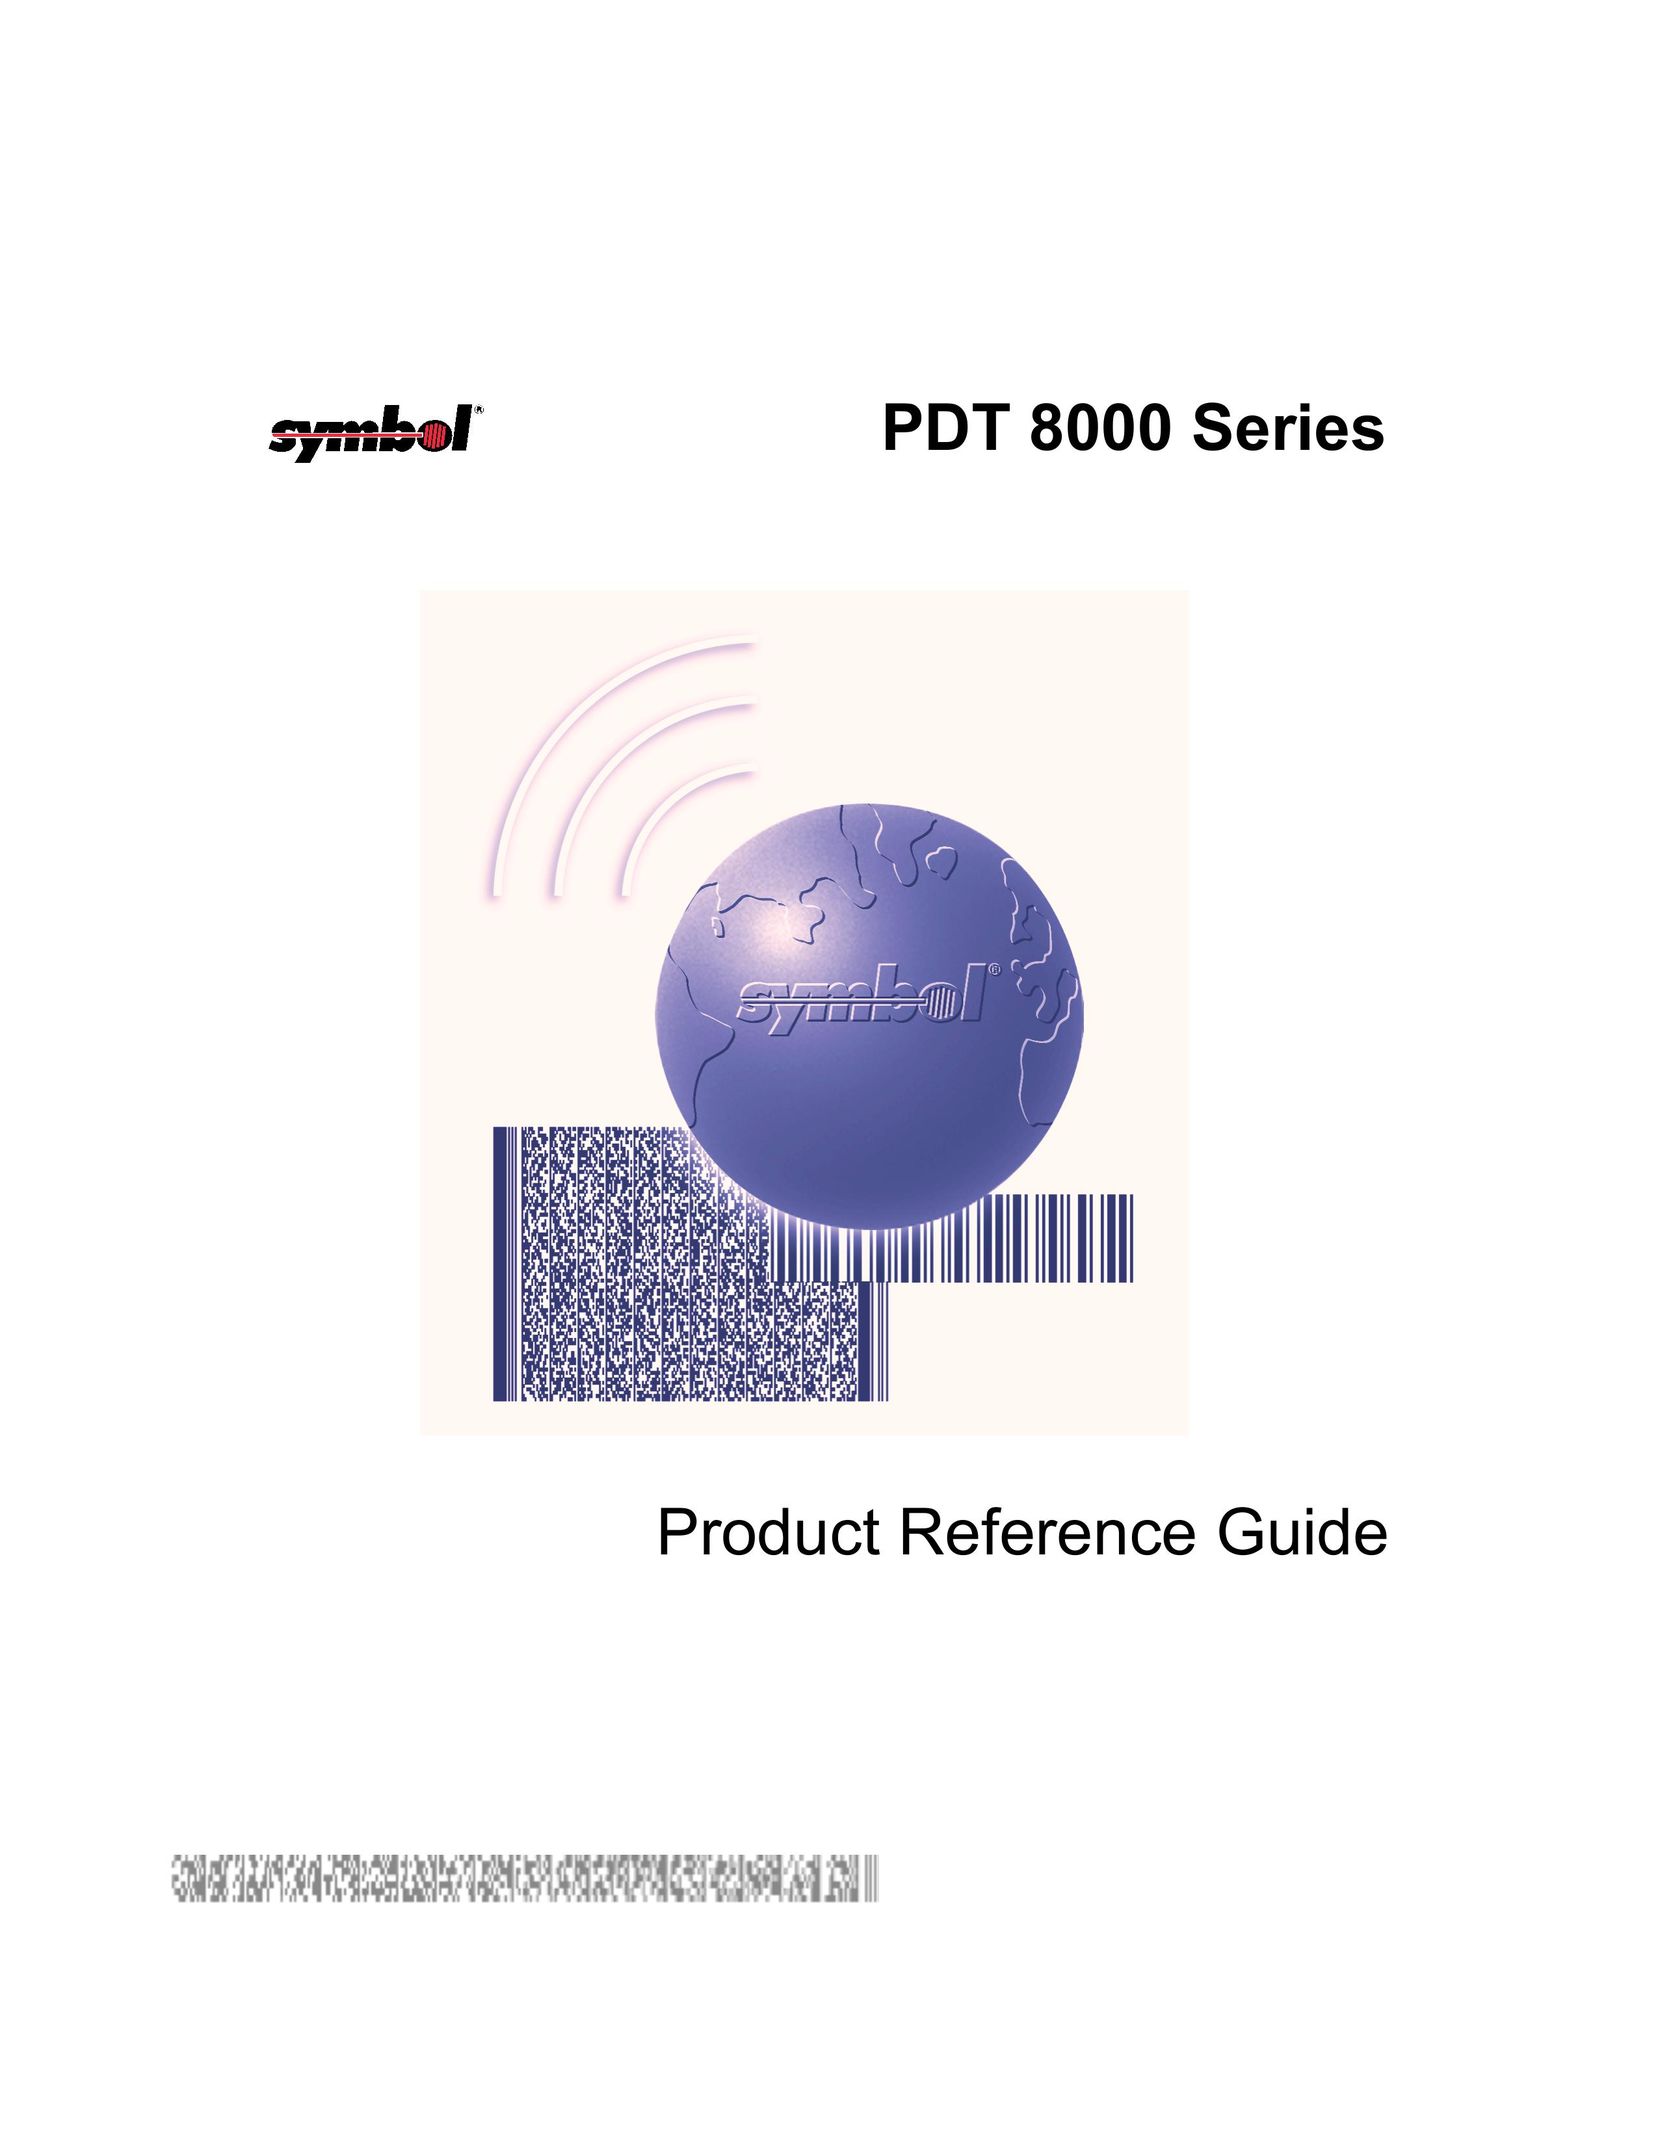 Symbol Technologies PDT 8000 Series PDAs & Smartphones User Manual